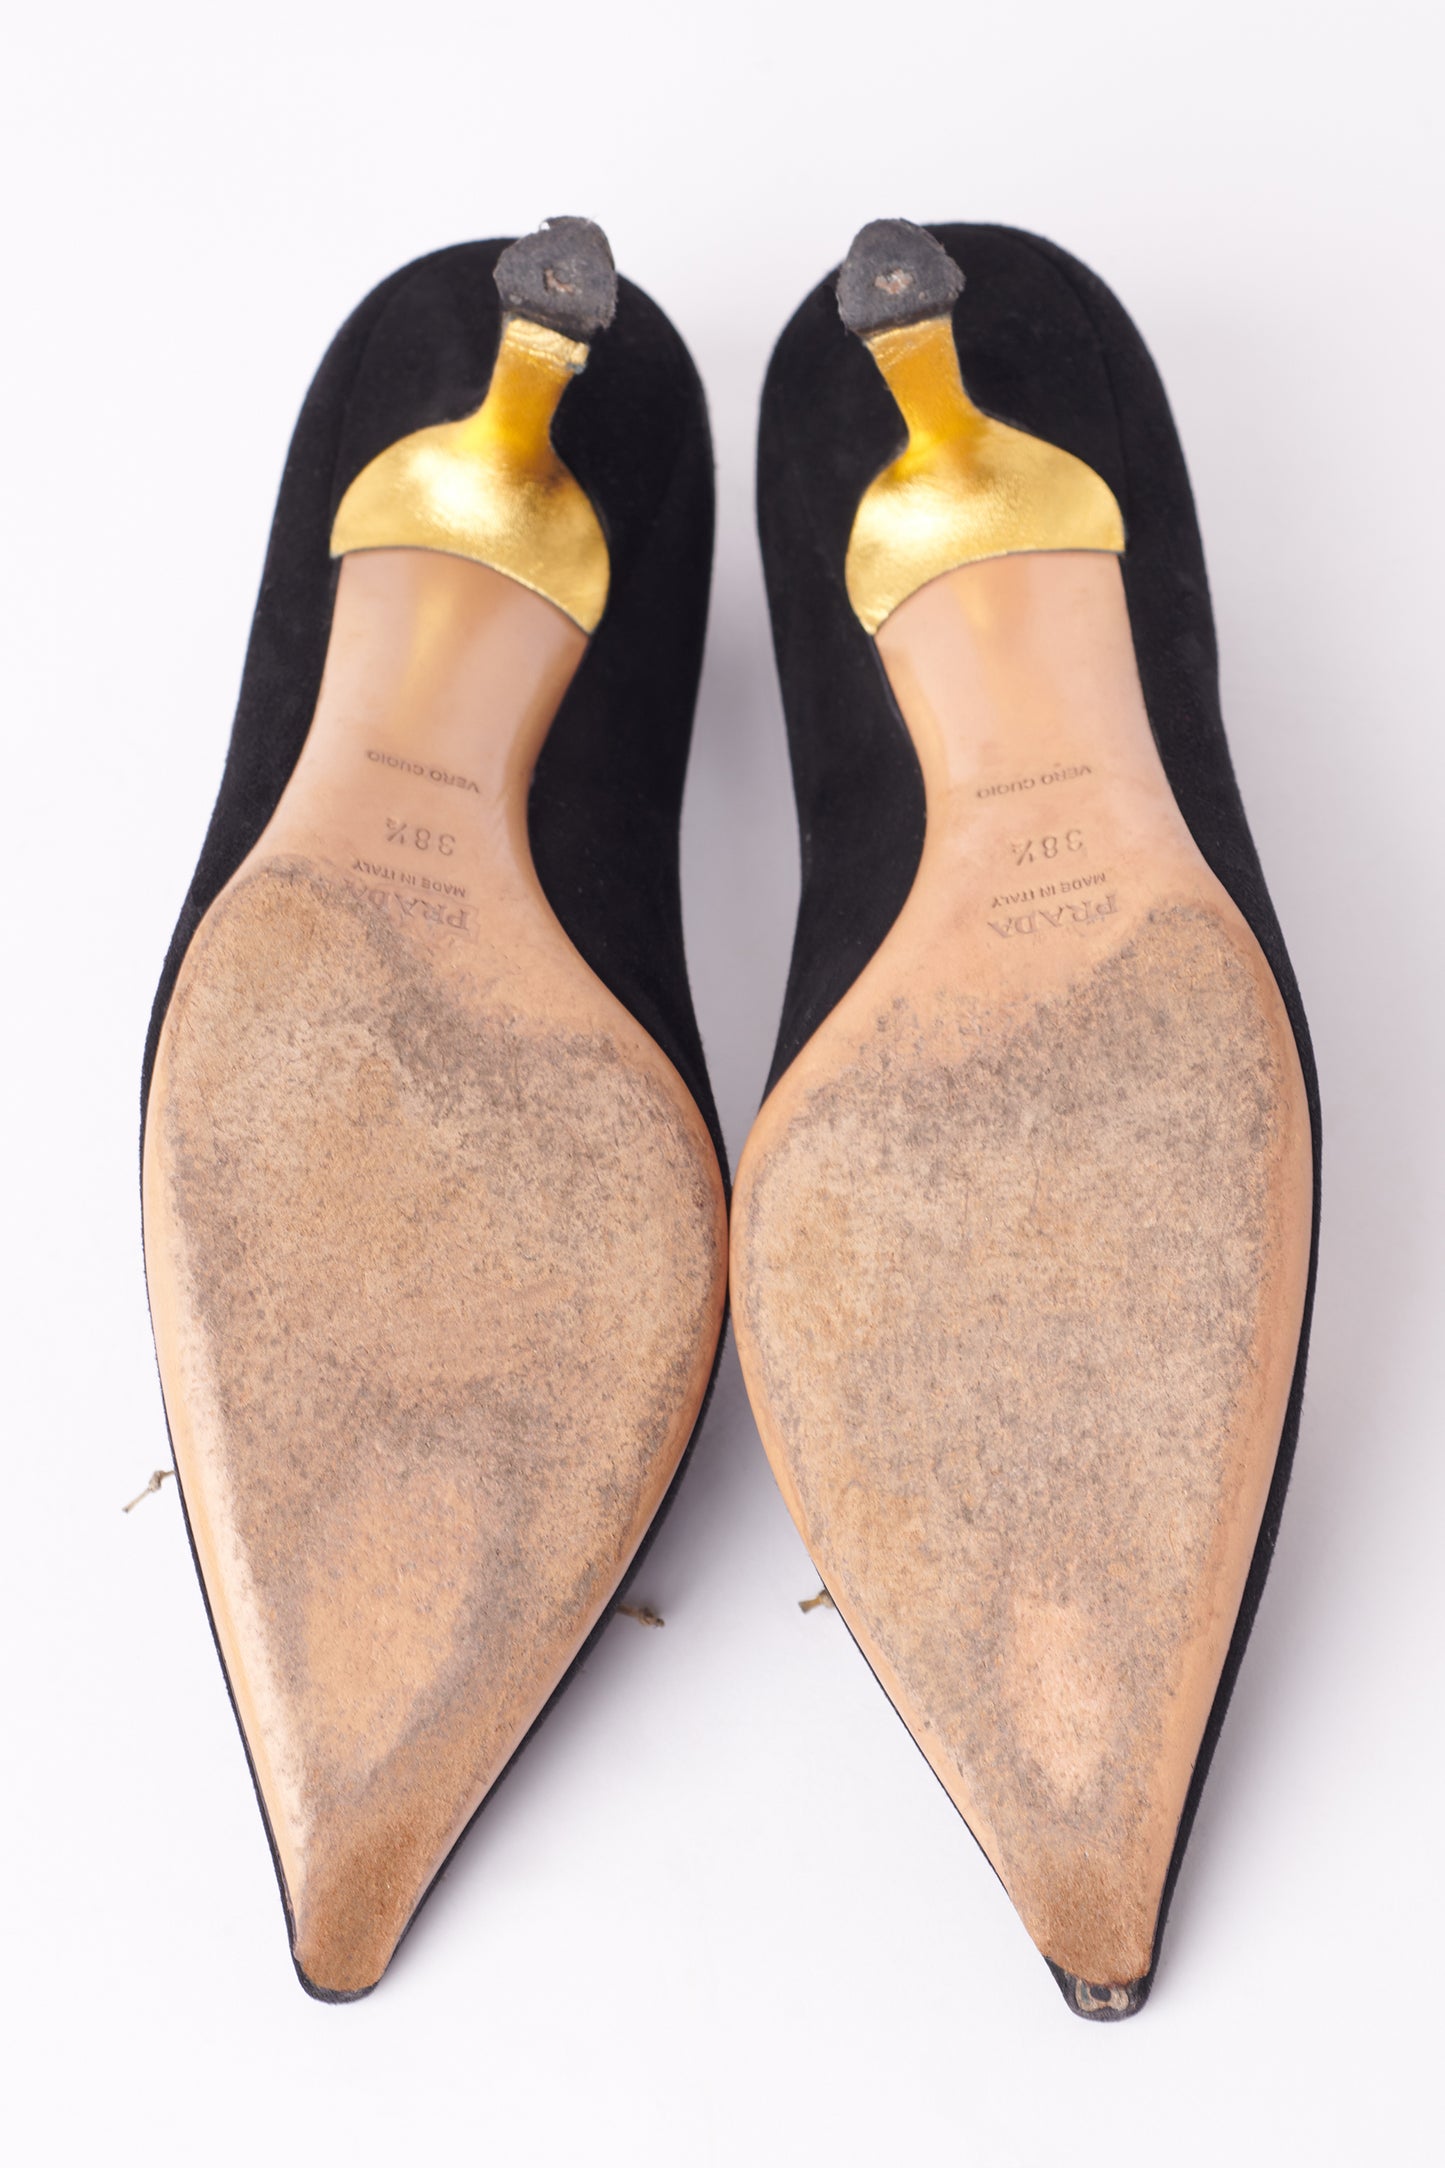 Vintage 2000's Black Suede Pumps Heels